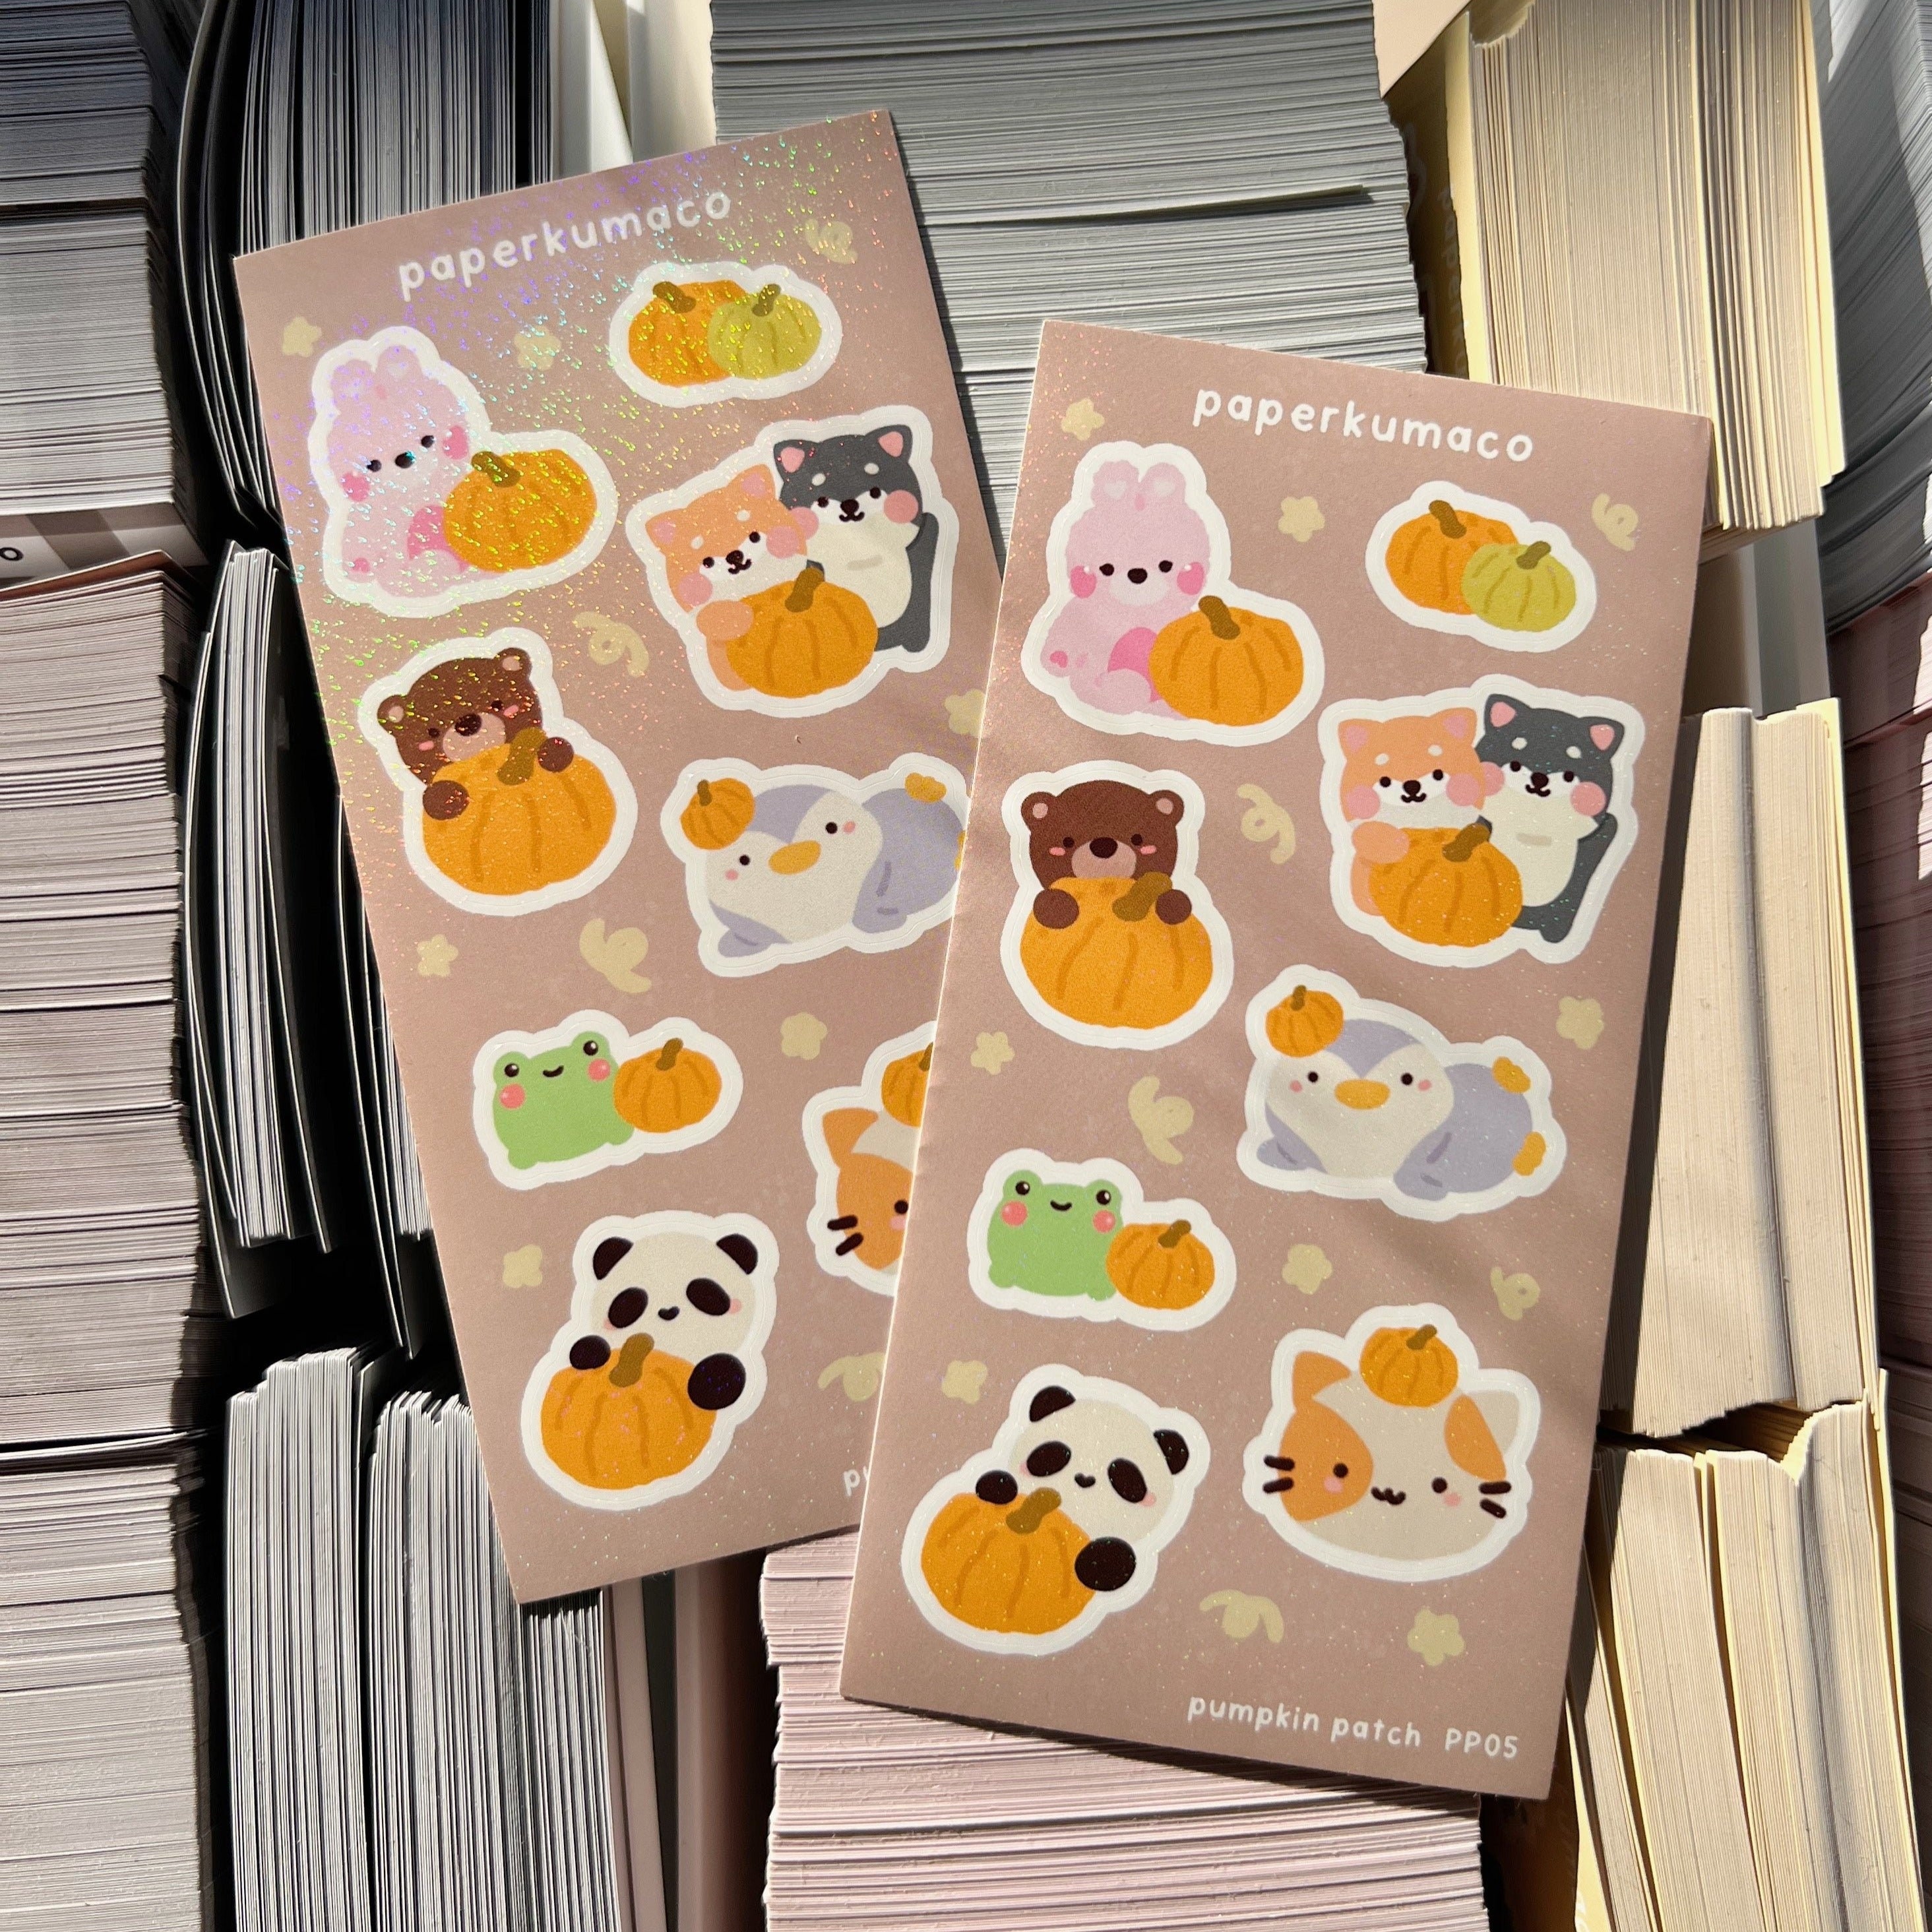 Pastel Coats Fashion Stickers - paperkumaco